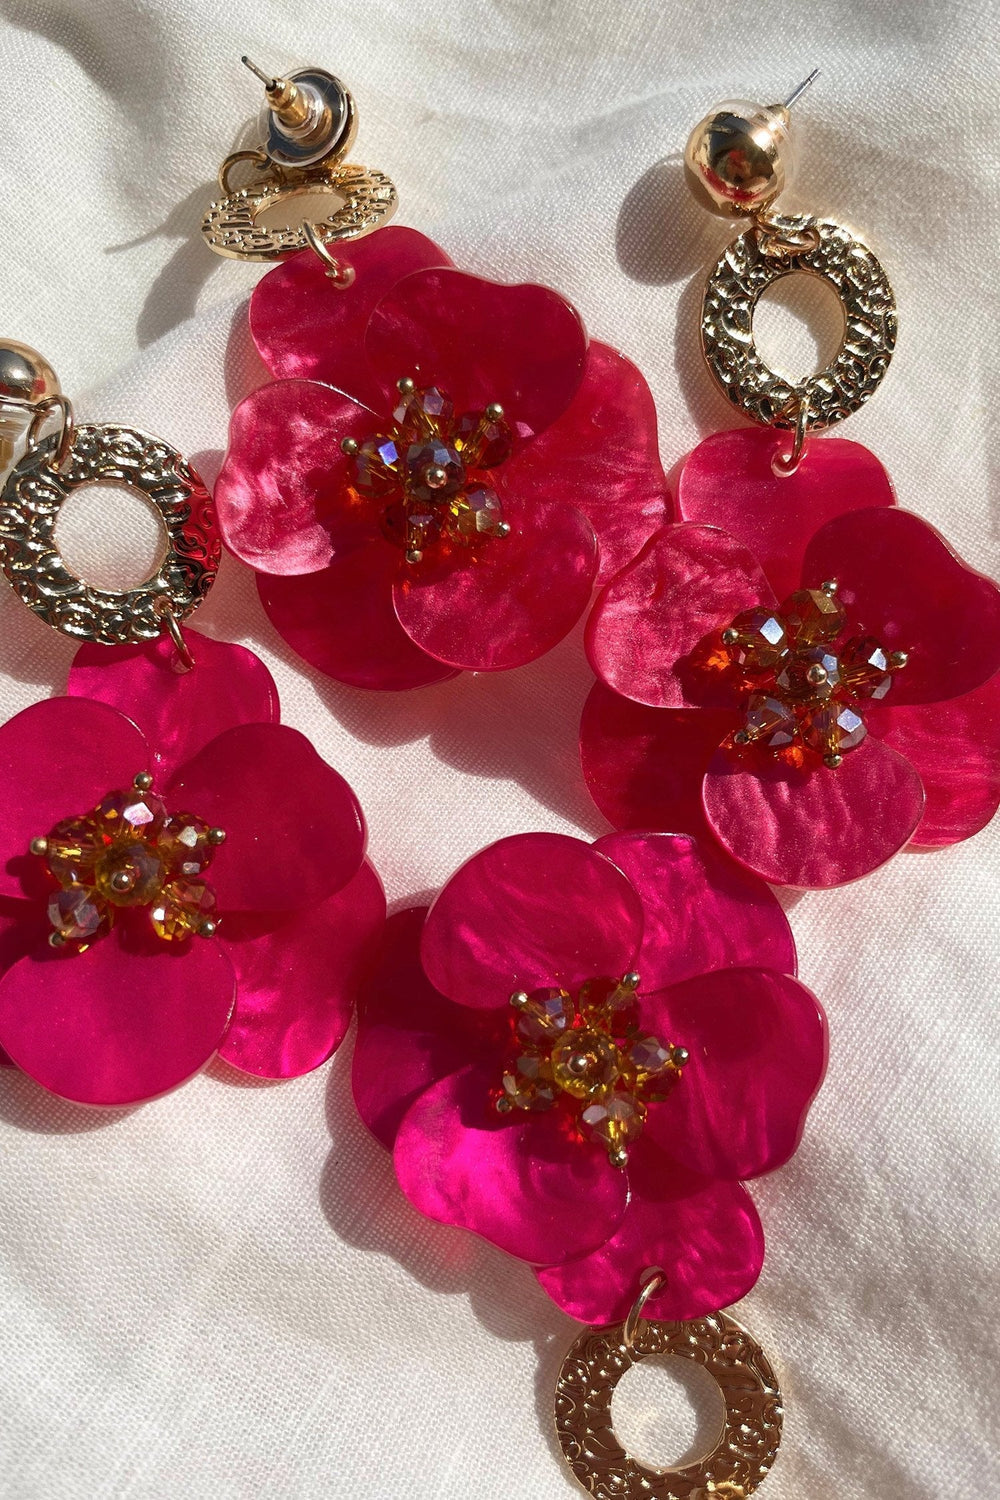 Petra Magenta Flower Drop Earrings